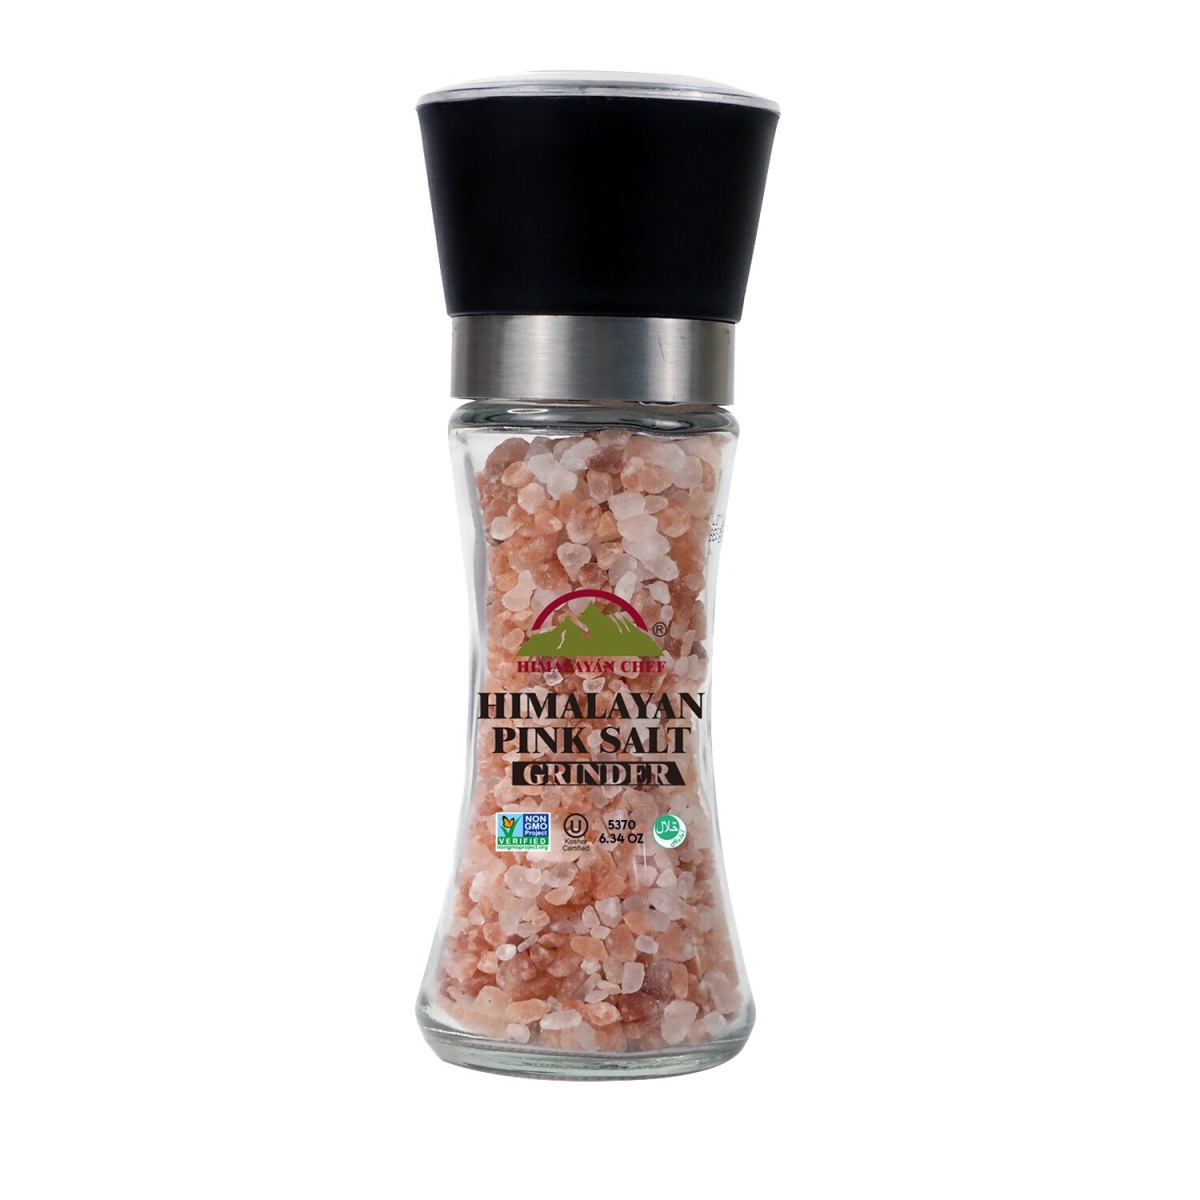 Picture of Himalayan Chef 5370 6.34 oz Pink Salt - Coarse Grinder